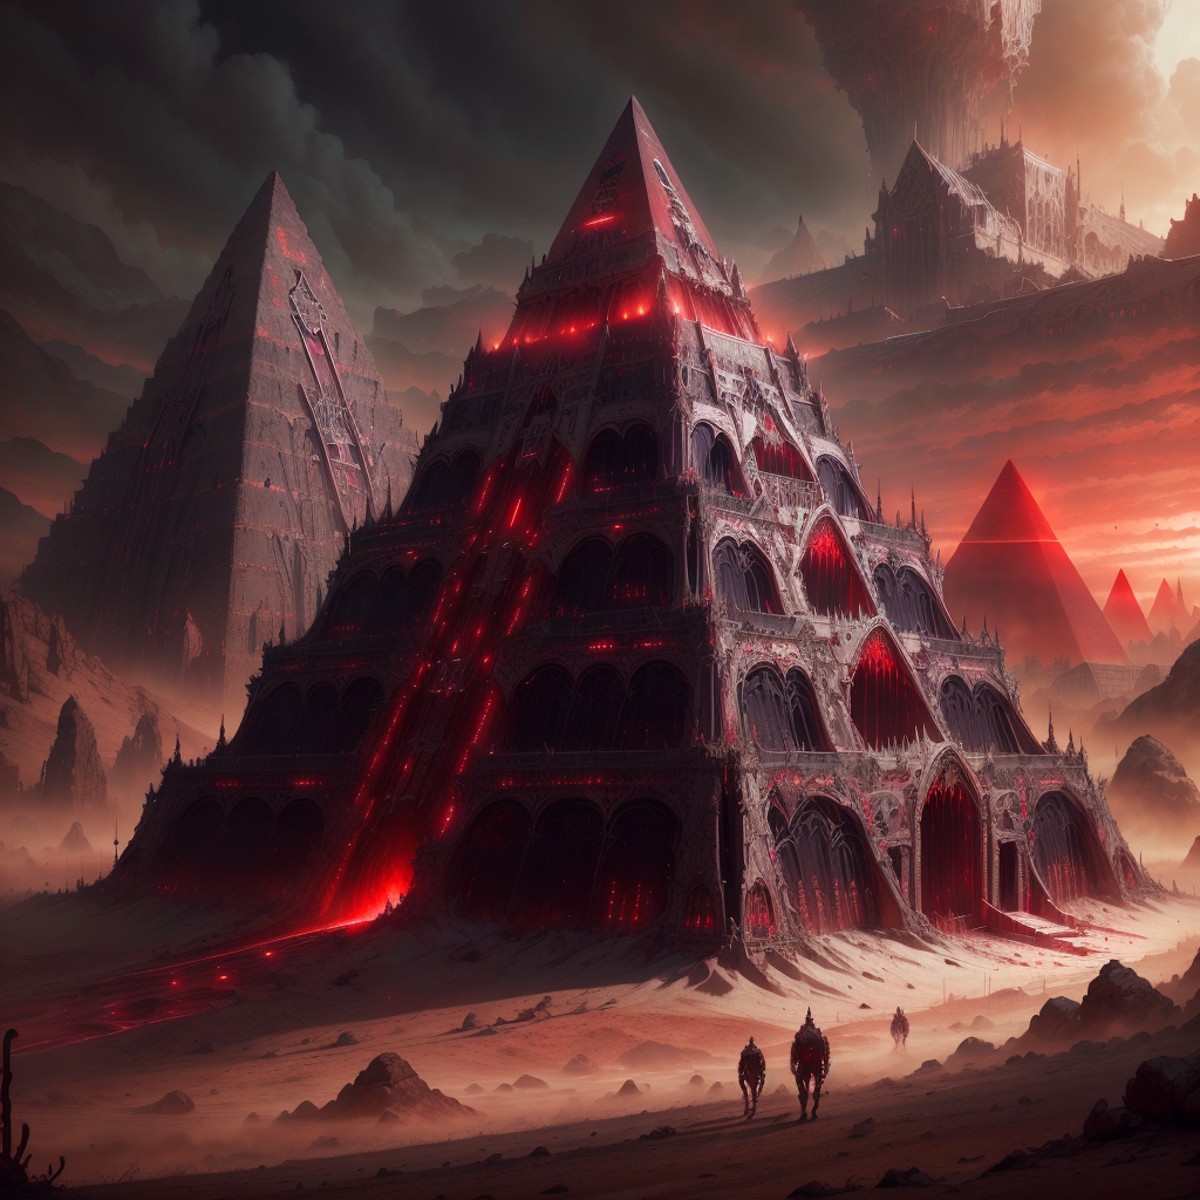 07482-12345-, vamptech, scifi,vampiric,blood, _desert, pyramid _(structure_),red sky,.png